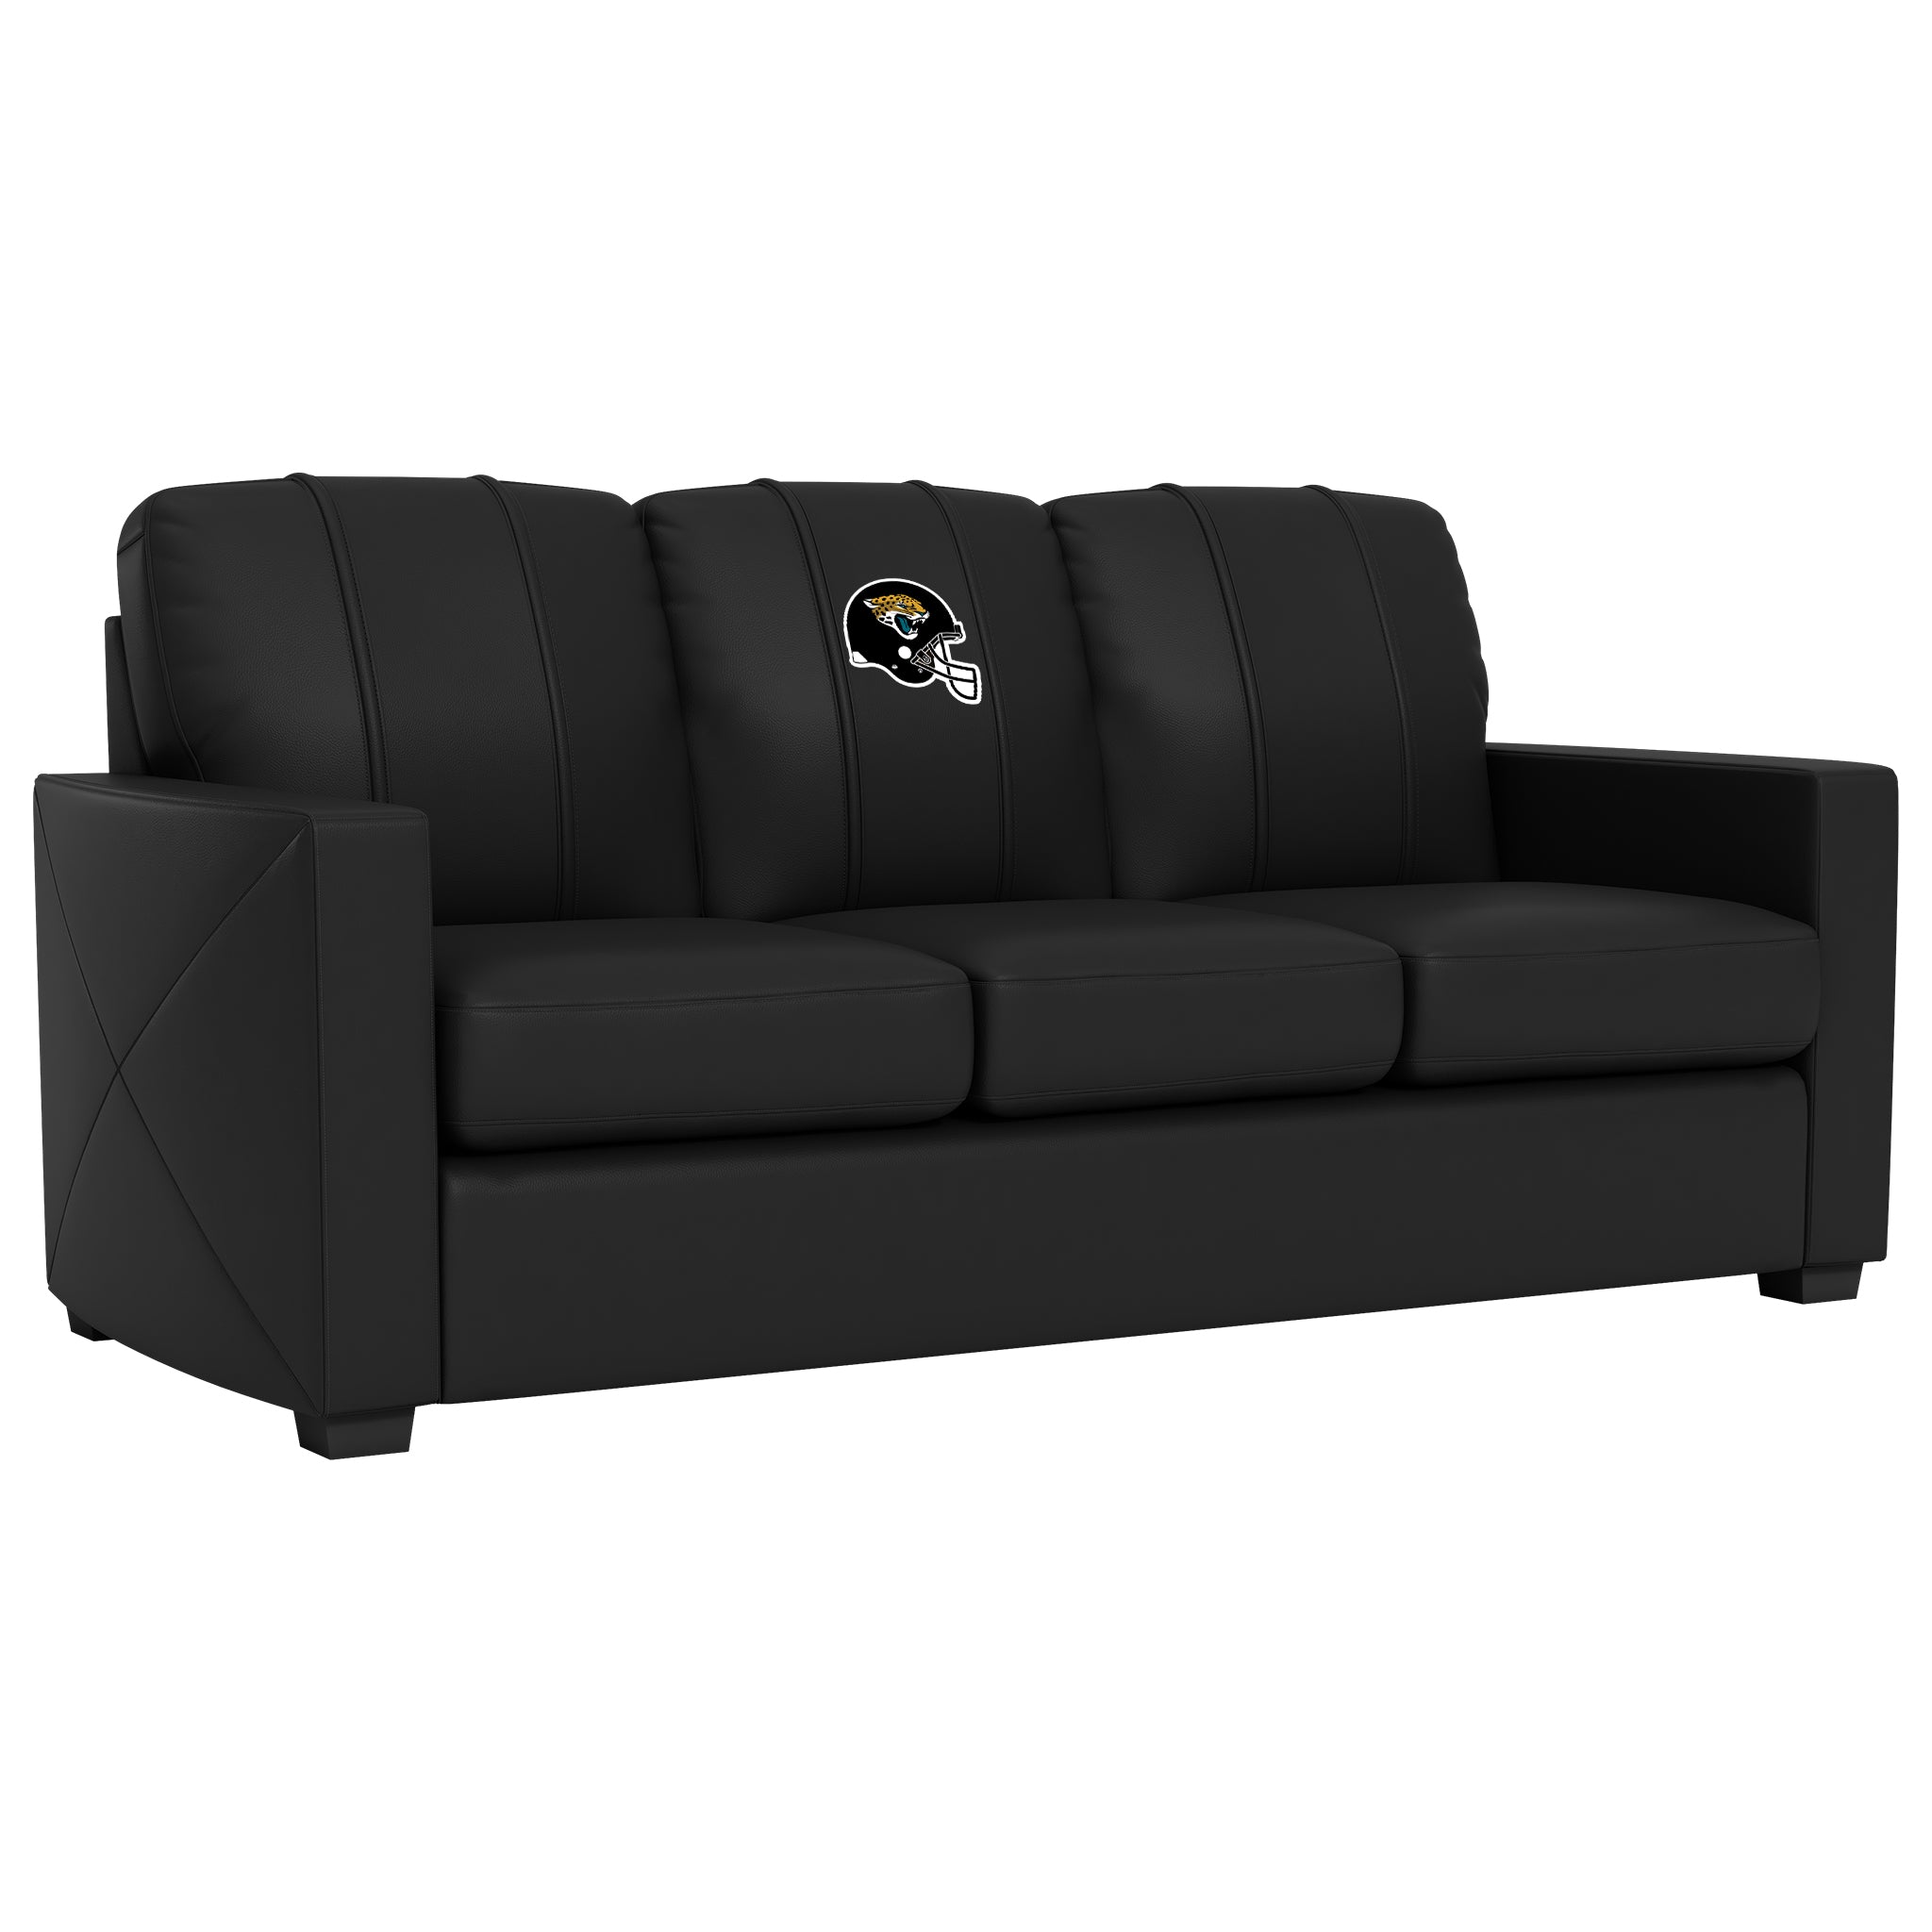 Silver Sofa with  Jacksonville Jaguars Helmet Logo